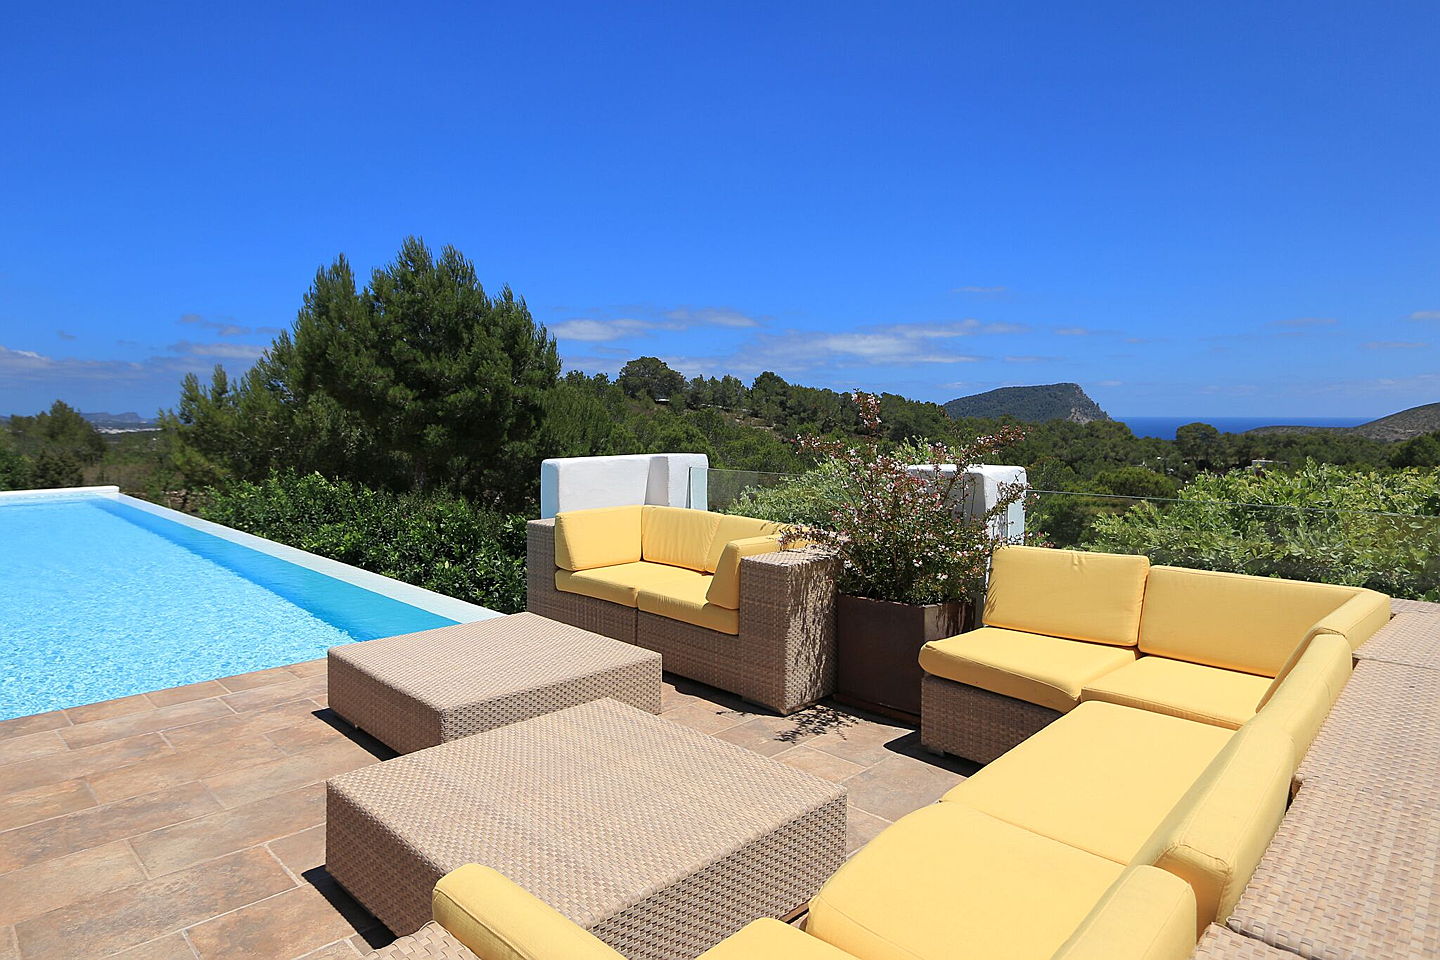  Ibiza
- Dream house with outdoor pool (Santa Eulalia)